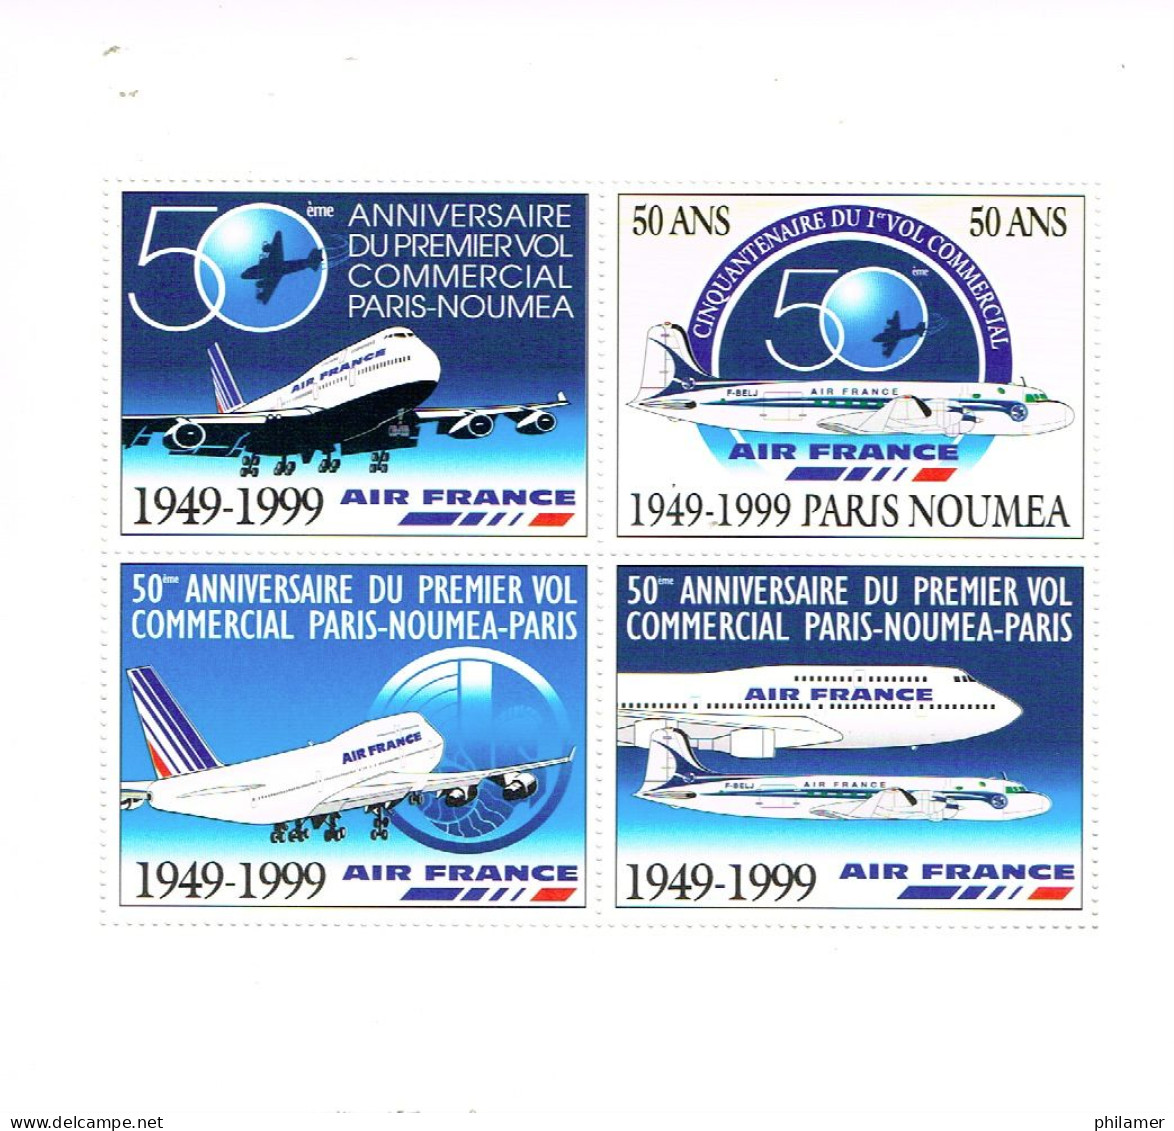 Nouvelle Caledonie Caledonia Bloc 4 Vignettes Postales Cinderela Extraite Carnet Aircalin 1999 Avion Neuve TBE - Used Stamps